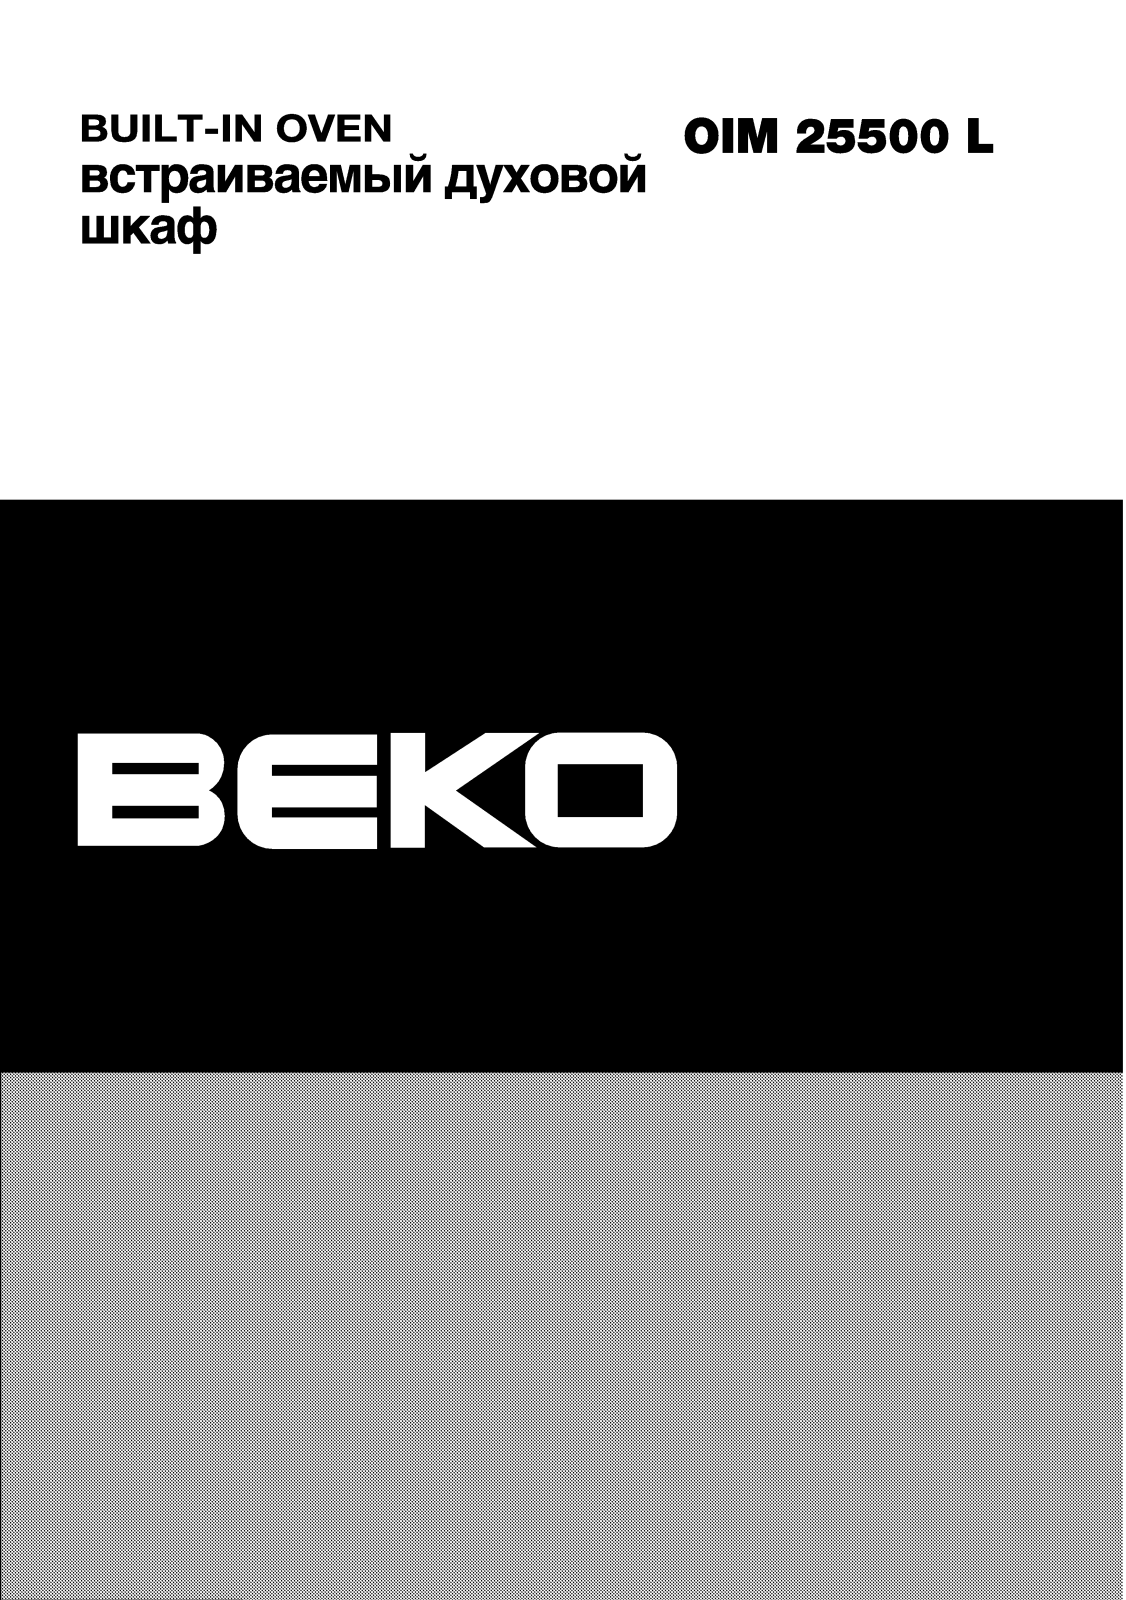 Beko OIM 25500 XL User Manual